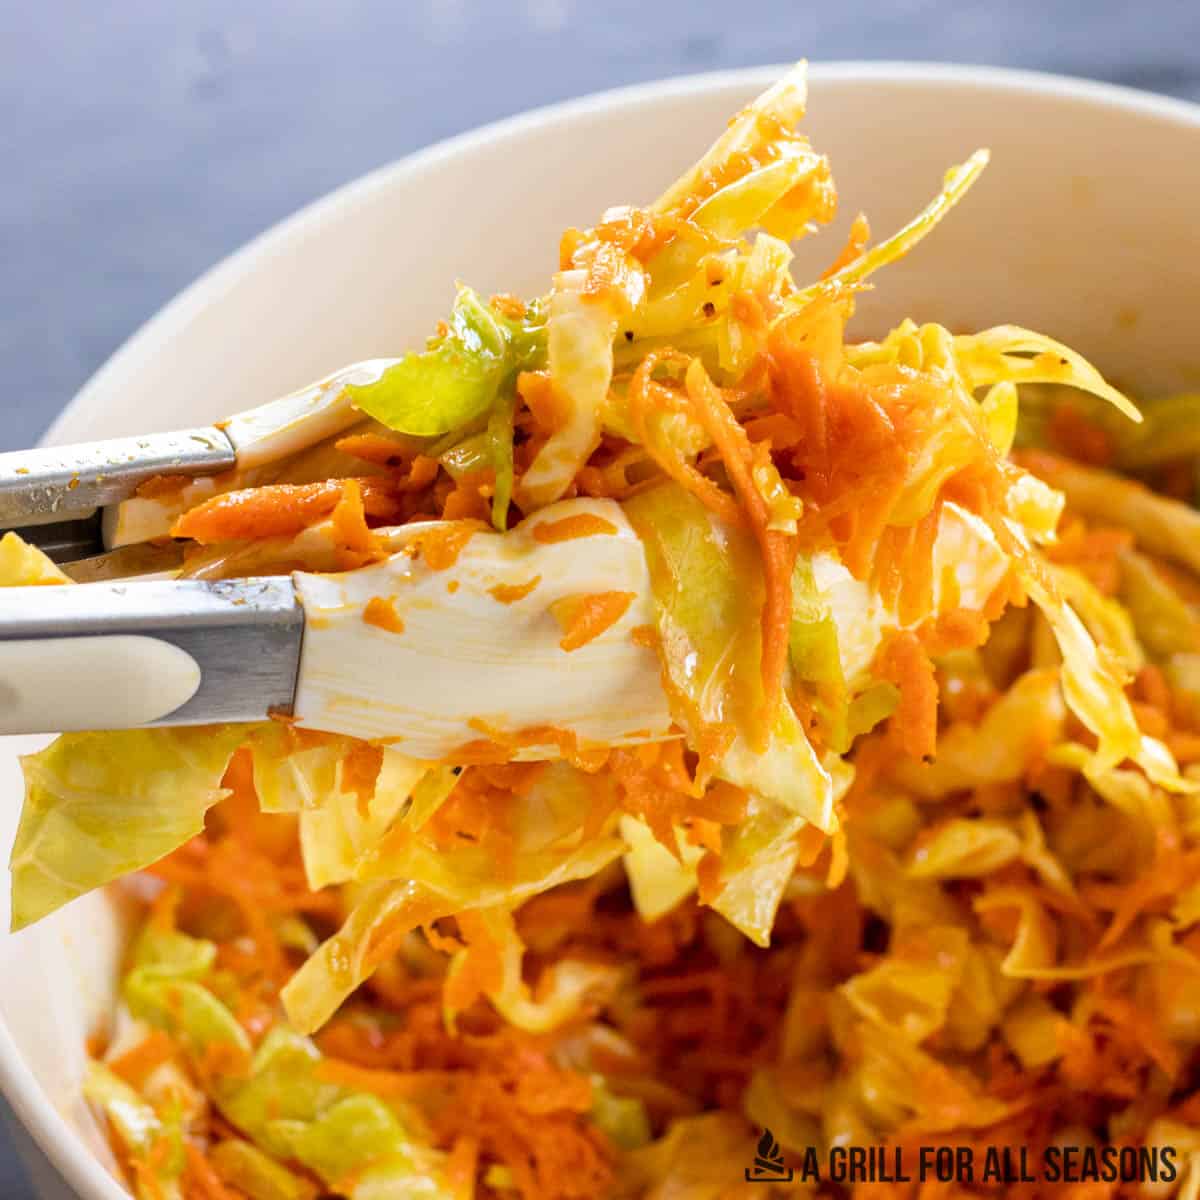 tongs lifting cabbage and carrot salad